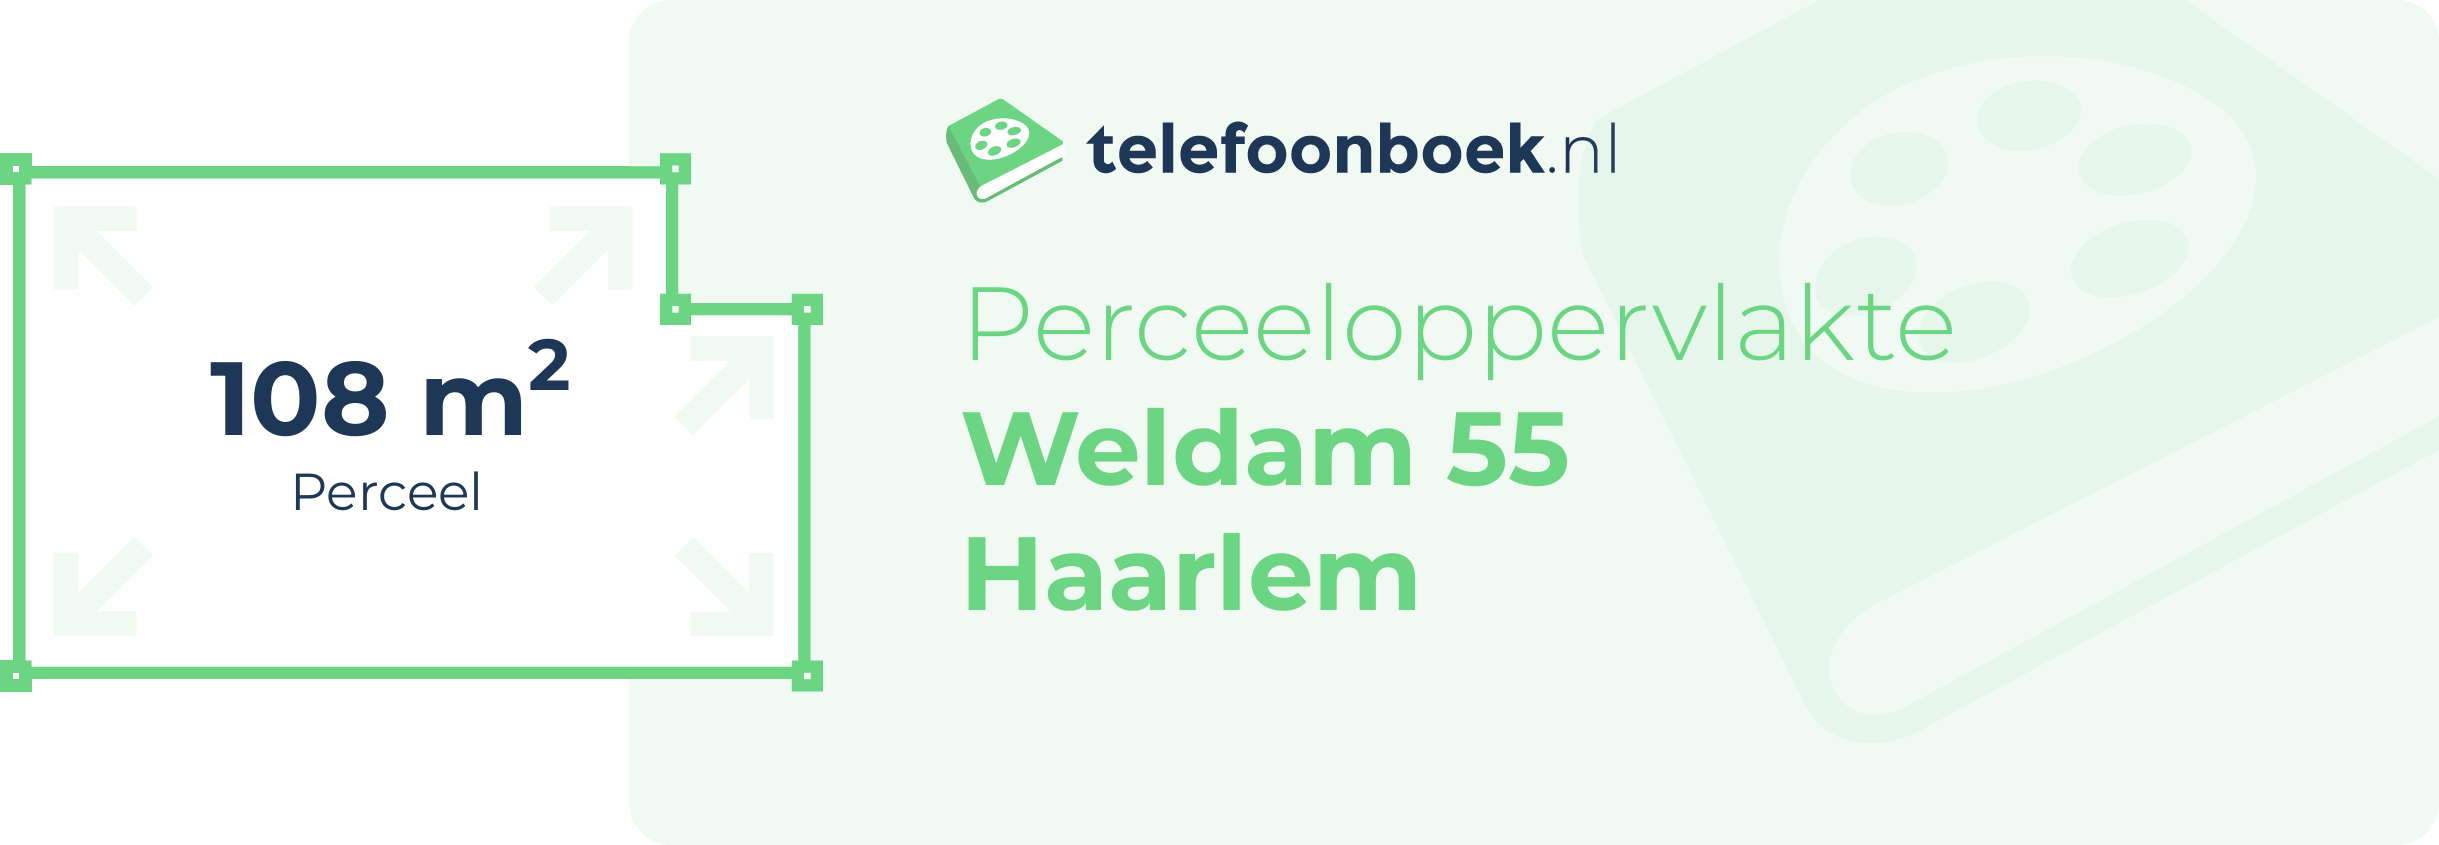 Perceeloppervlakte Weldam 55 Haarlem